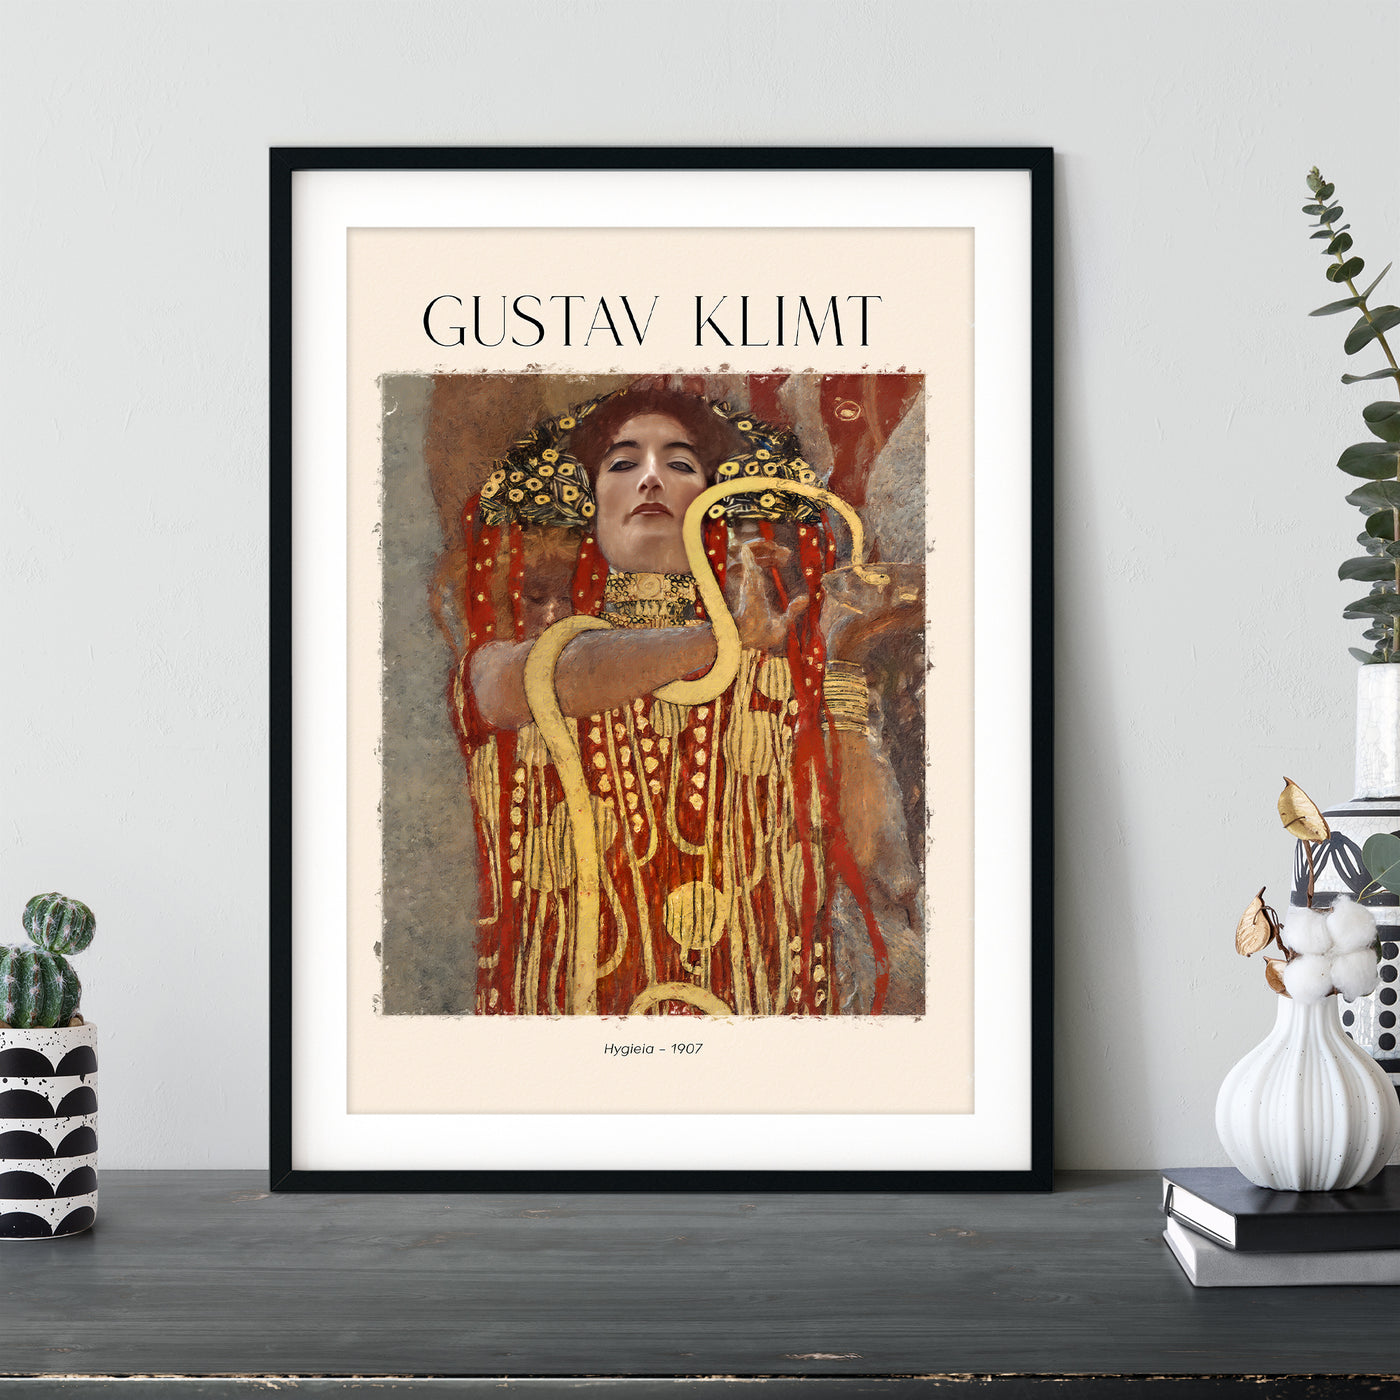 Gustav Klimt Portrait Of Hygieia - 1907